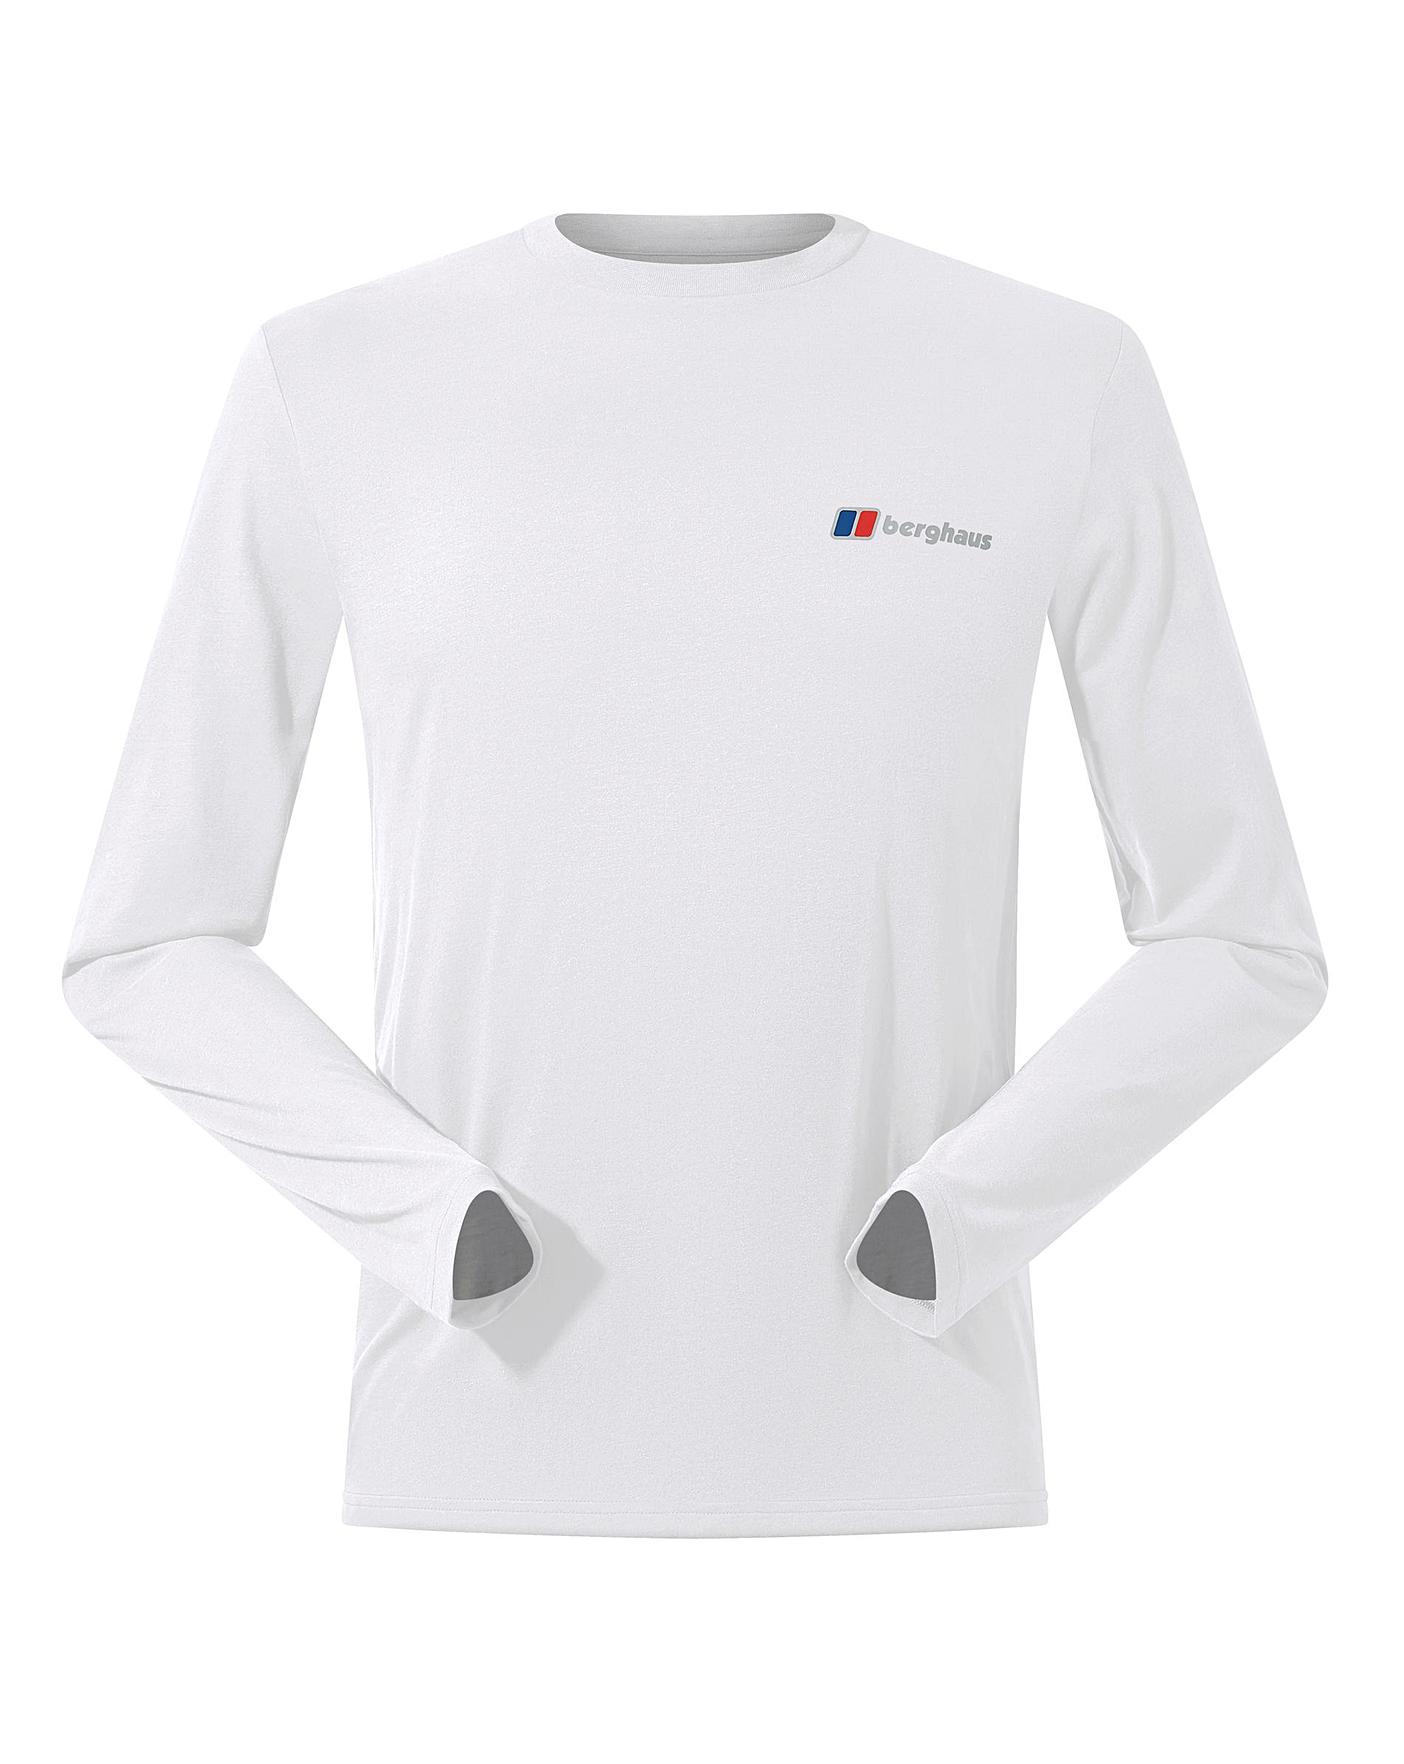 Berghaus LINEAR LANDSCAPE - Sports T-shirt - white - Zalando.de